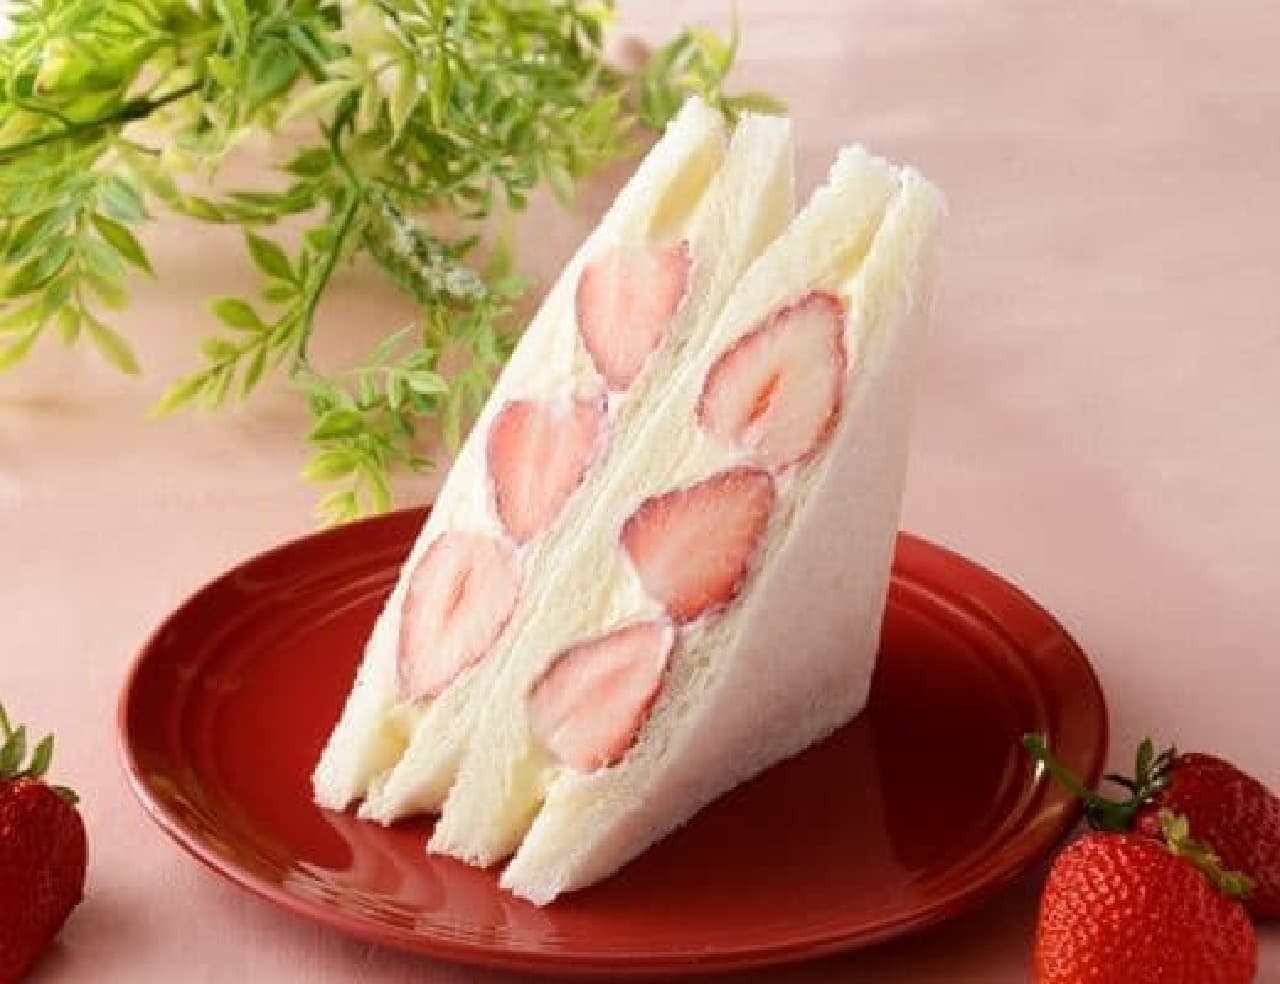 Lawson "Kasuta Do Strawberry Sandwich Supervised by Hattendo"